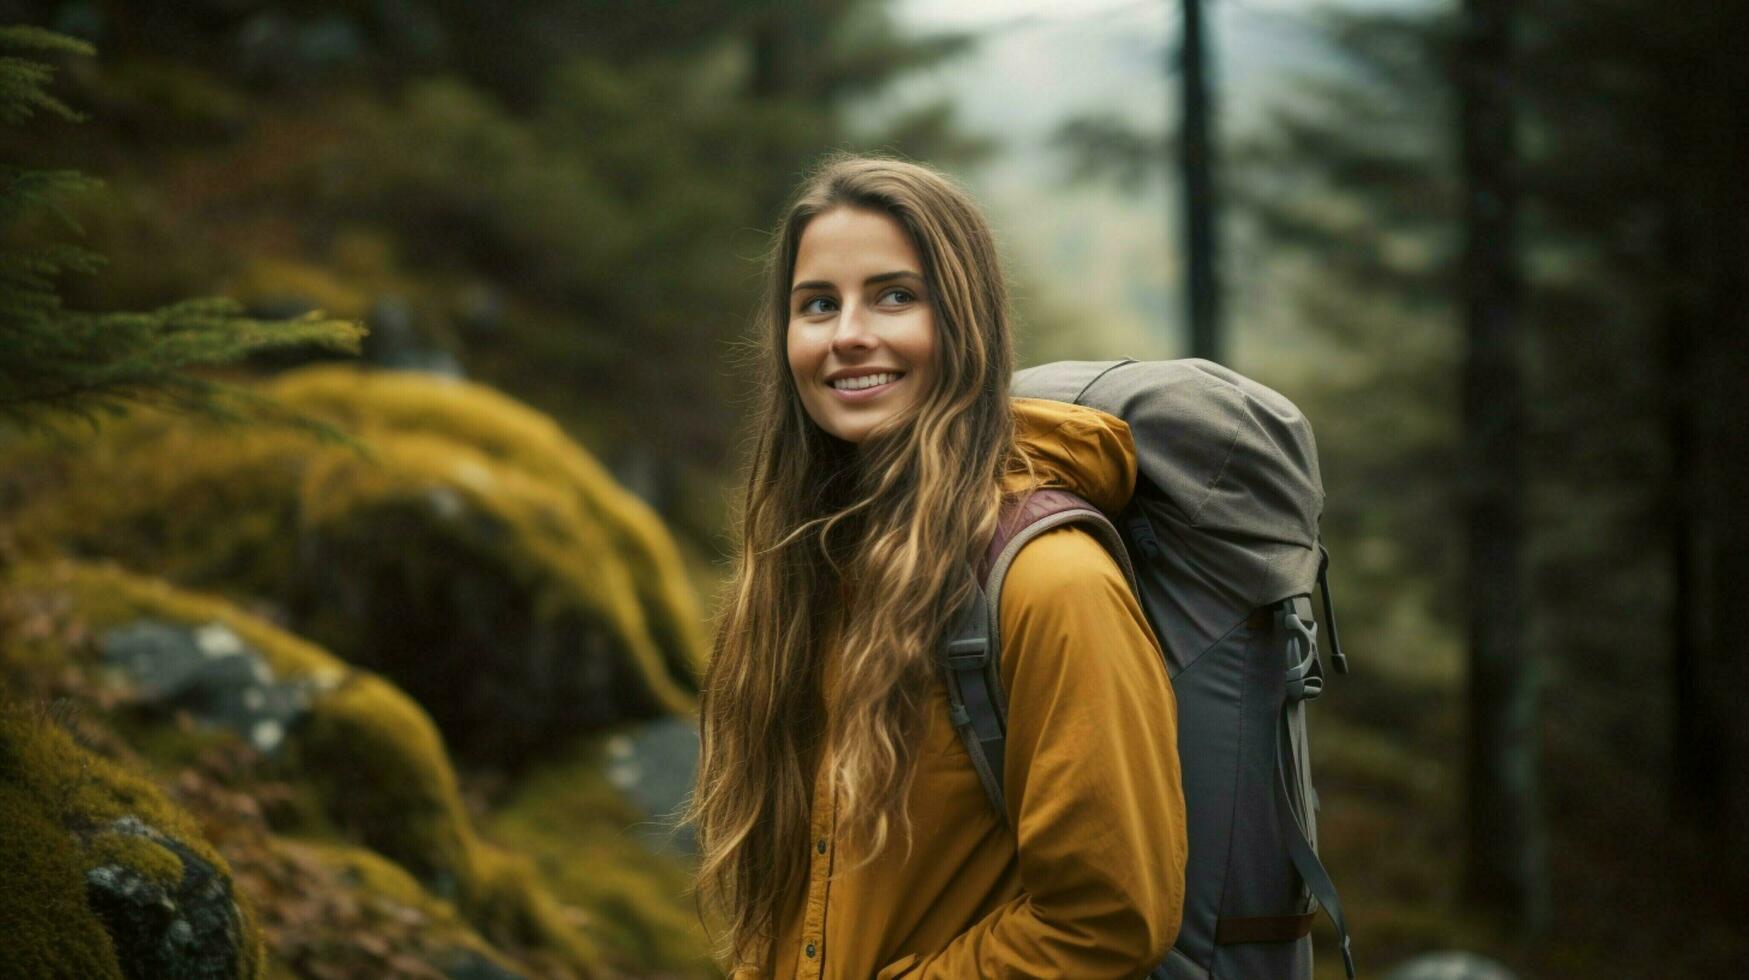 ung kvinna vandring i de skog njuter de skönhet foto